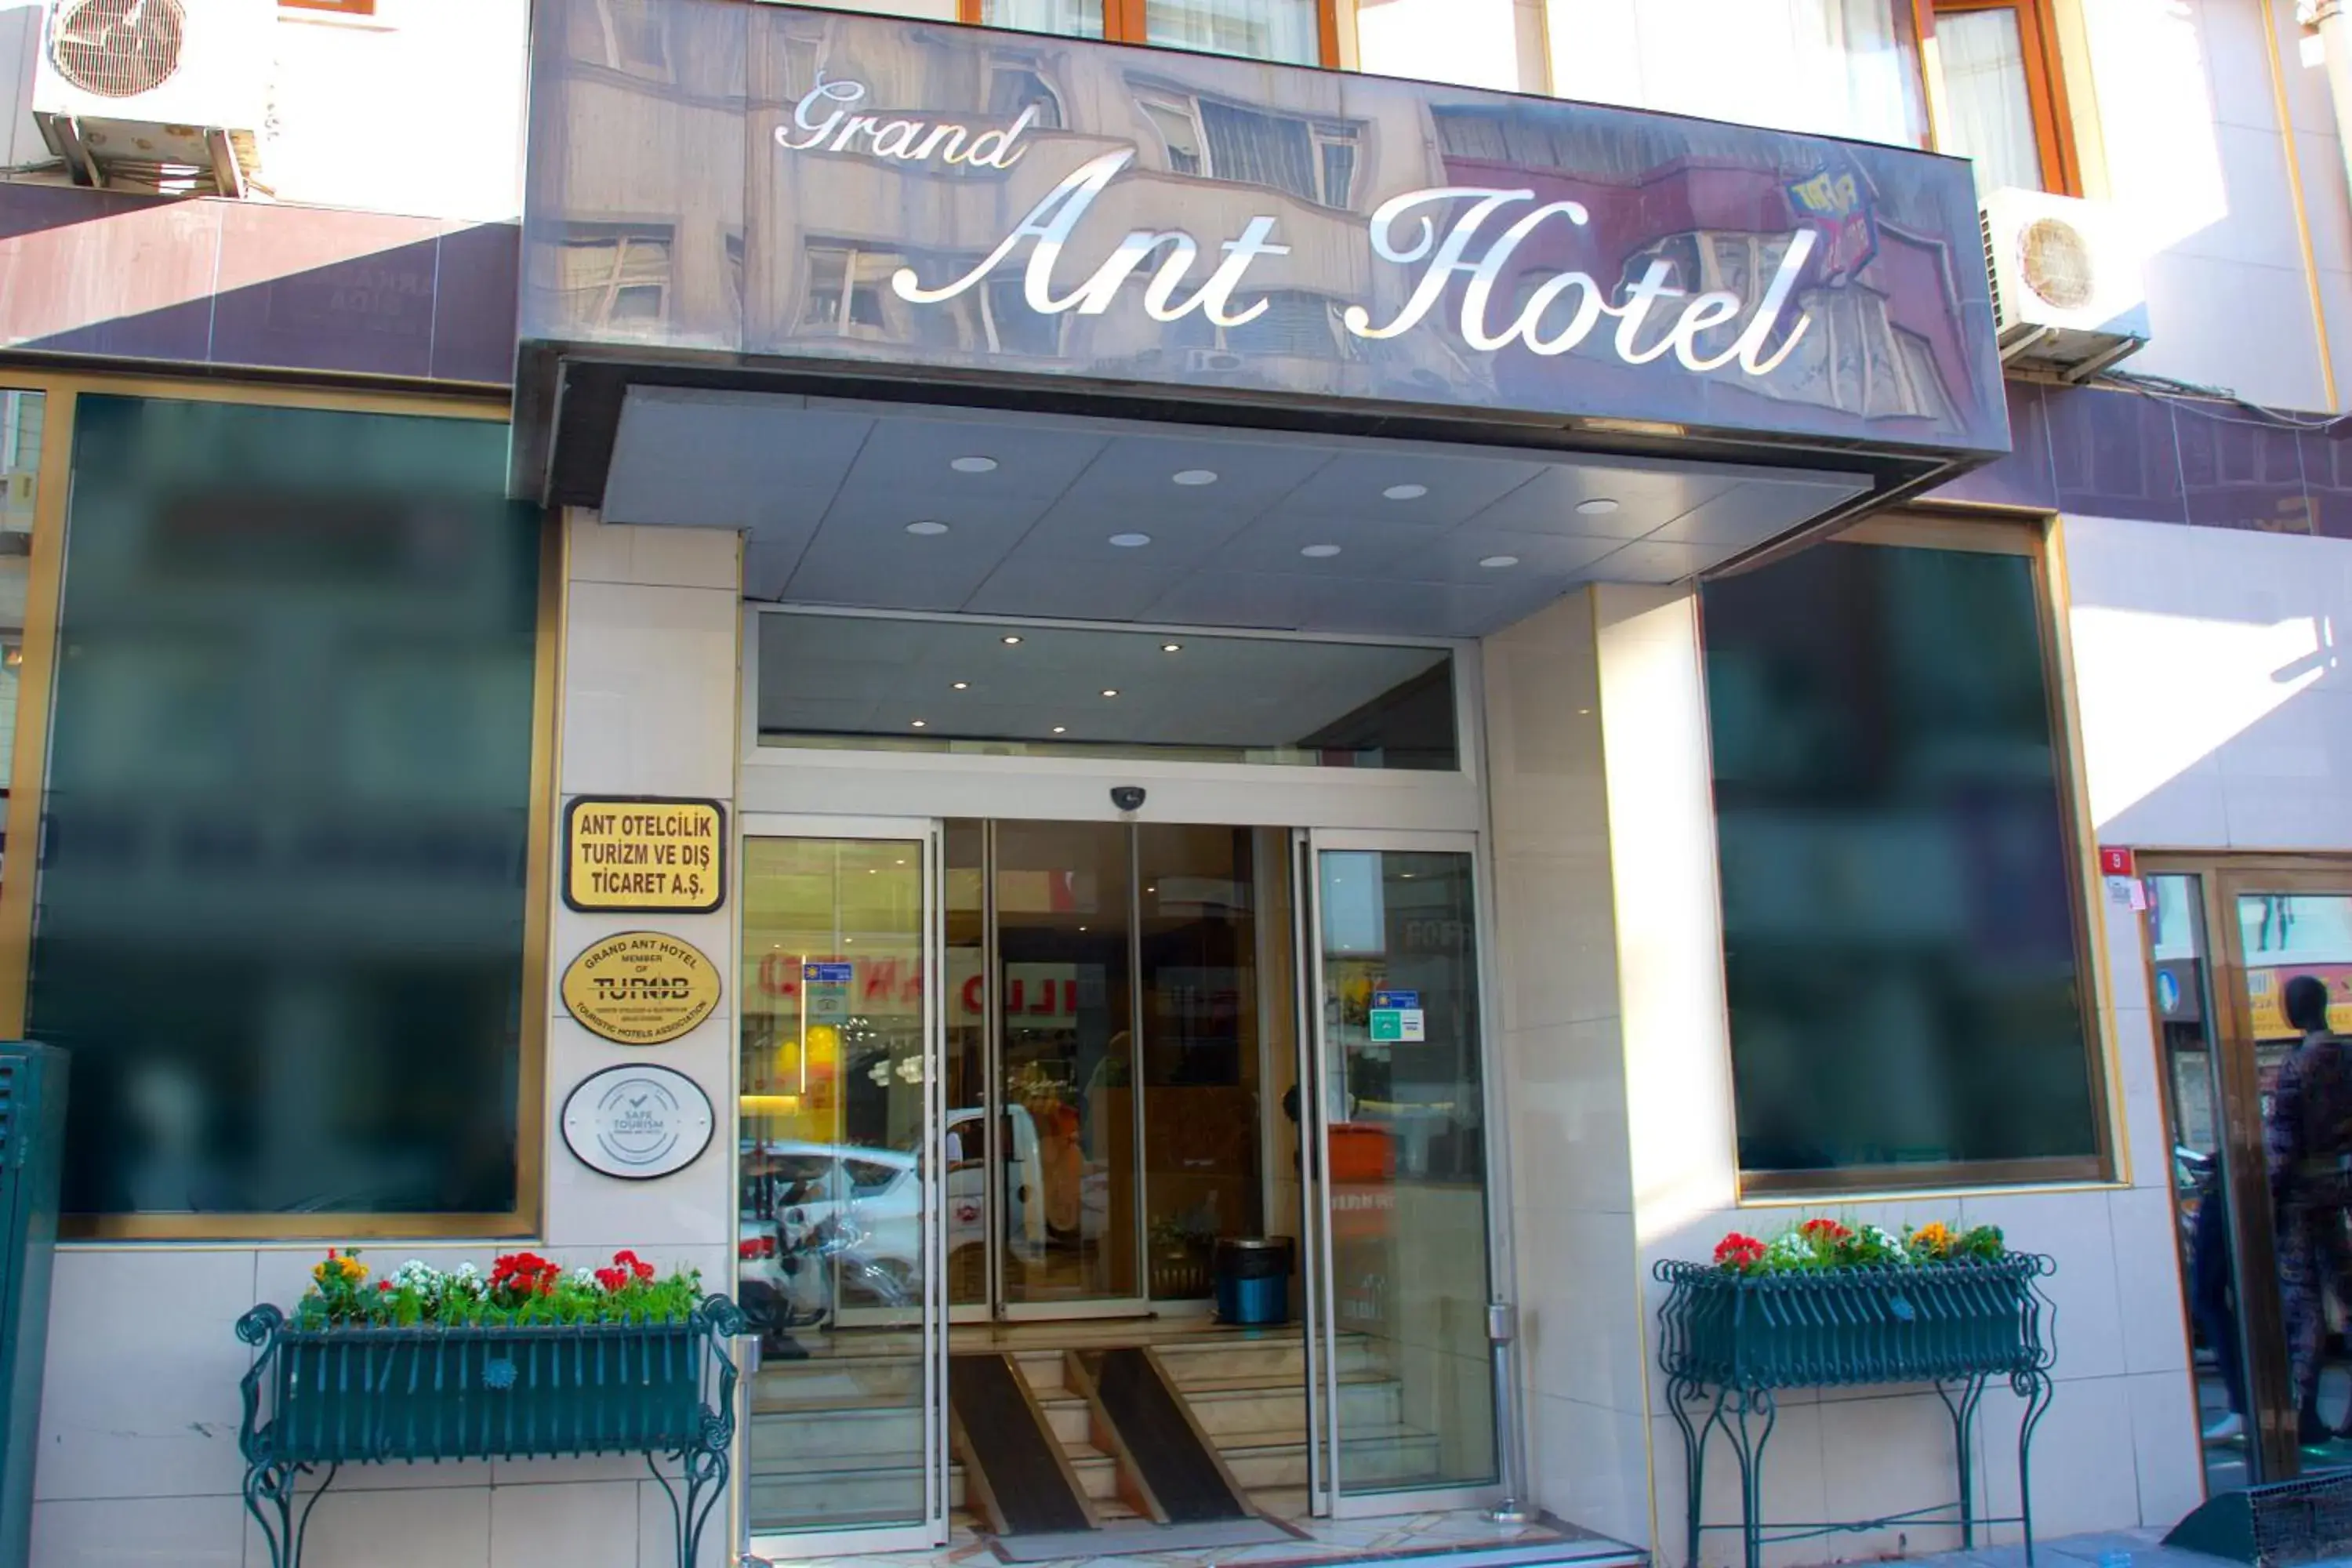 Facade/entrance in Grand Ant Hotel